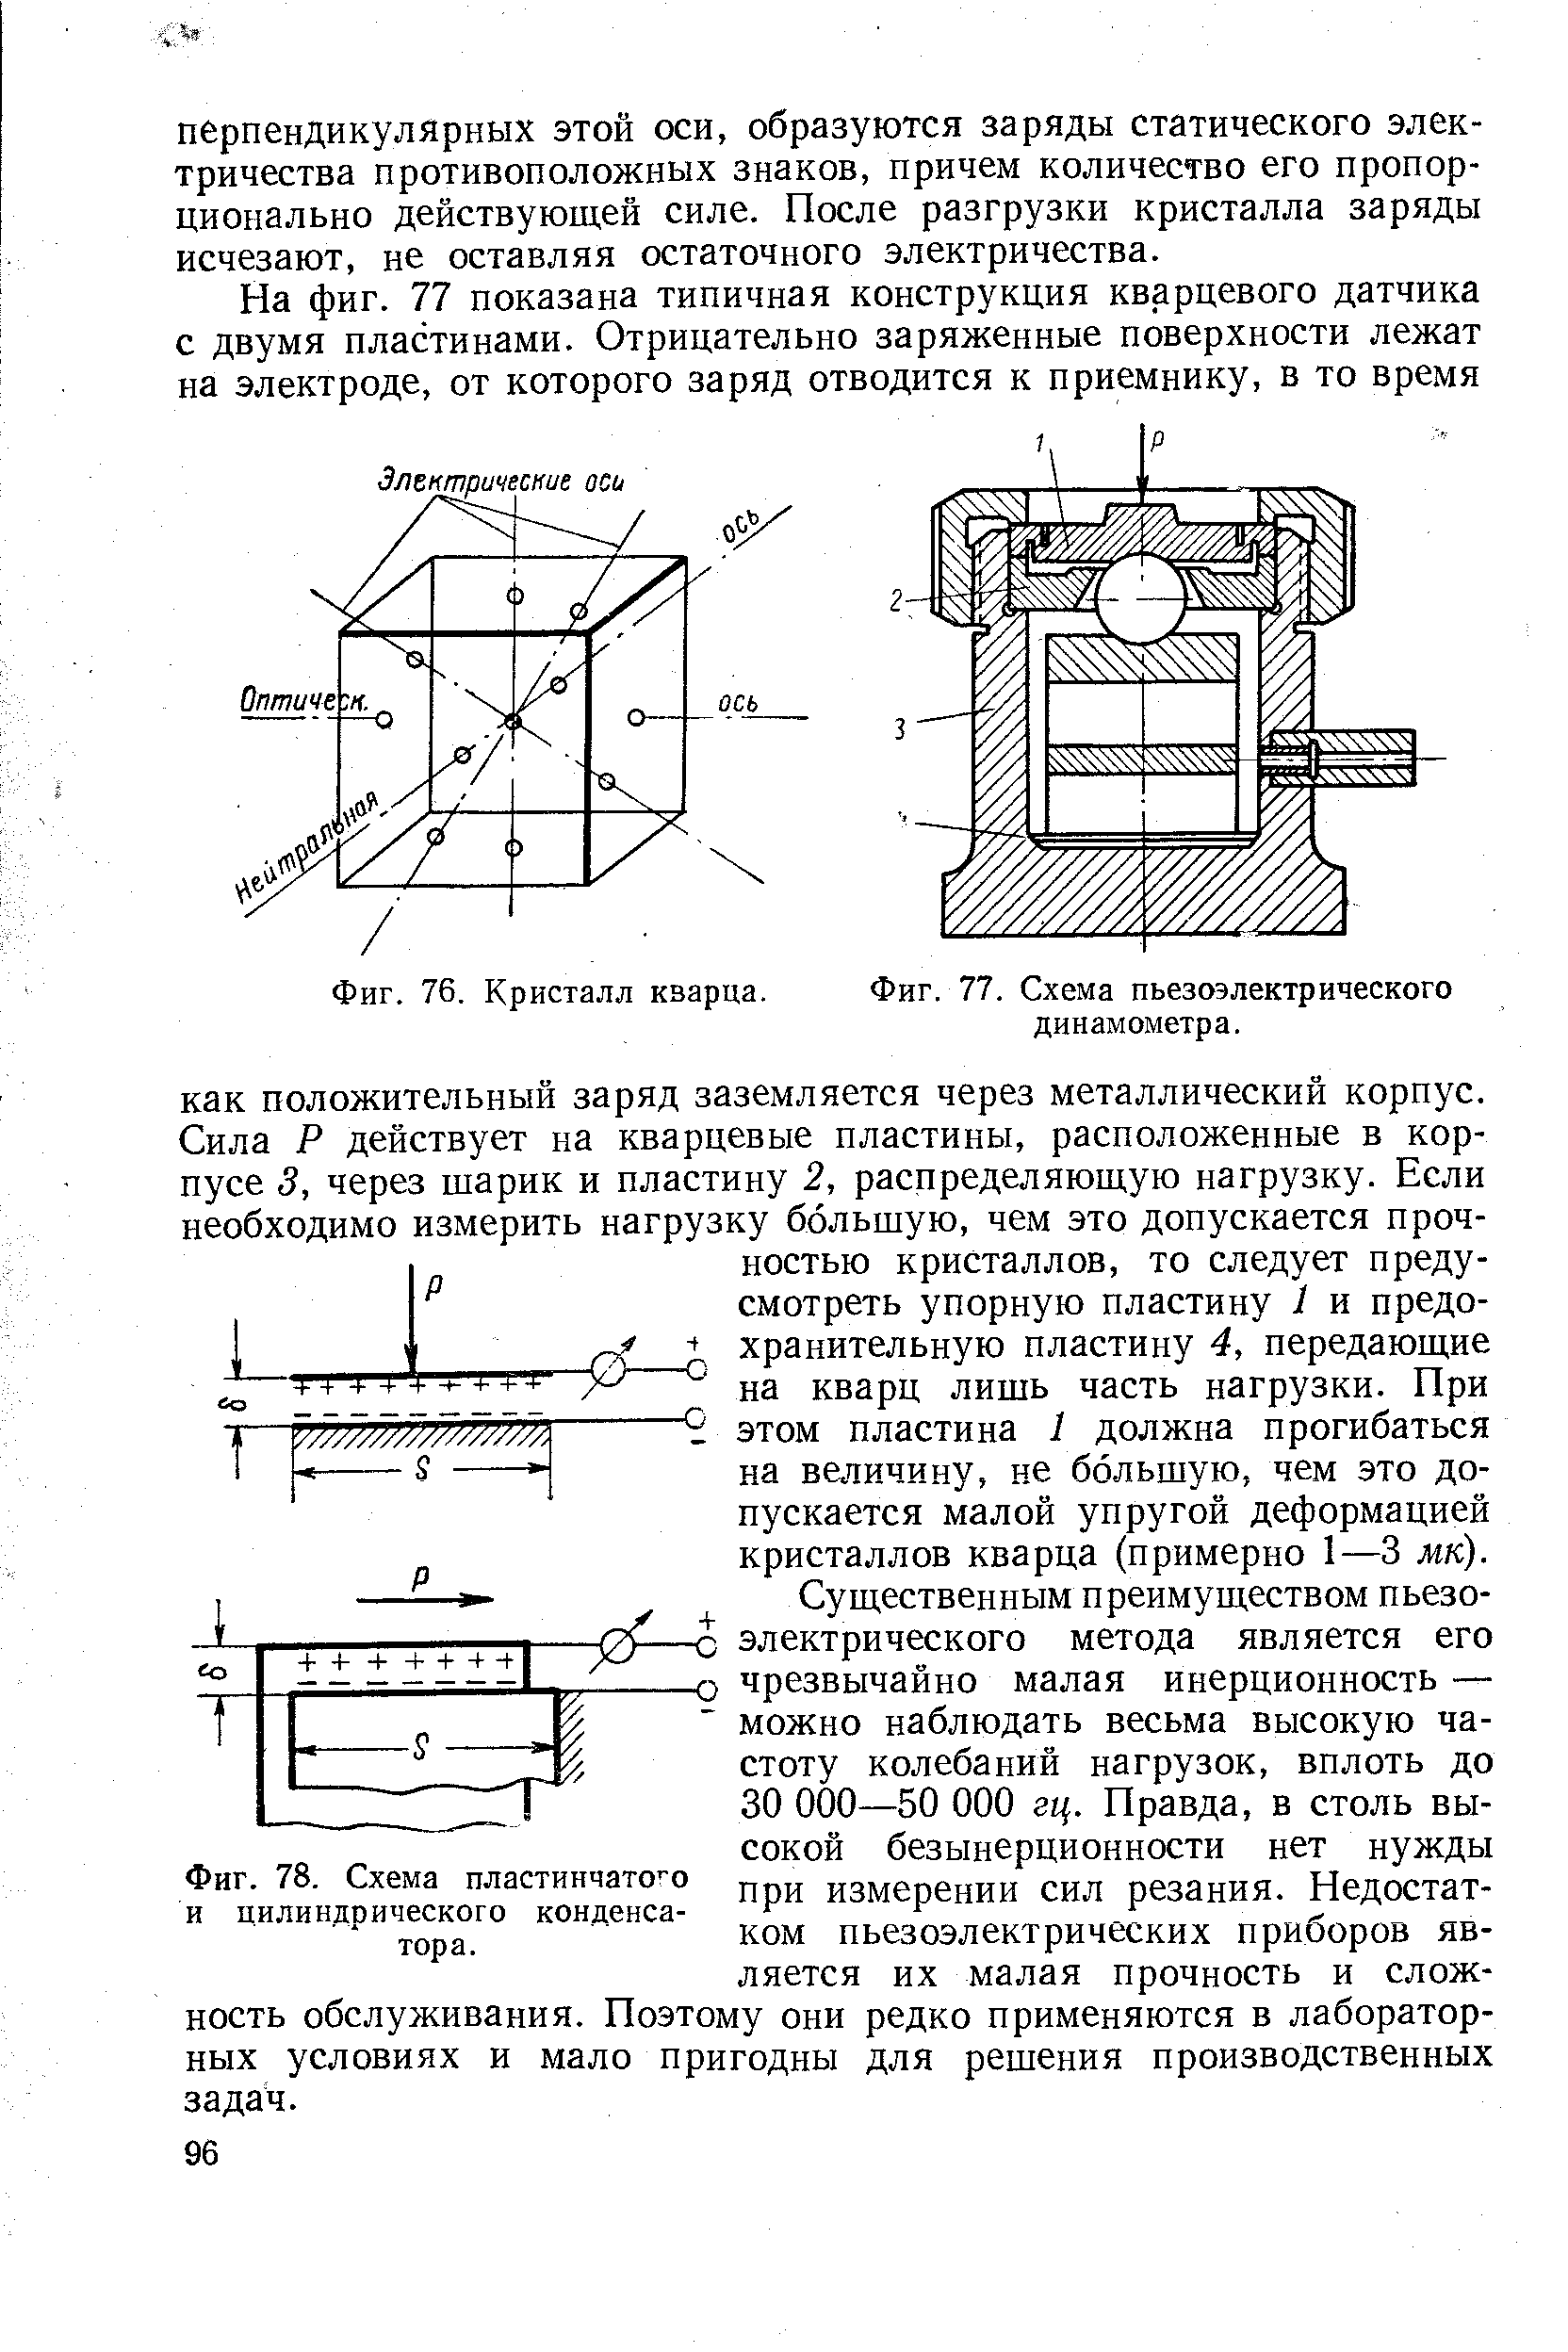 Фиг. 78. Схема пластинчато о и цилиндрического конденсатора.
